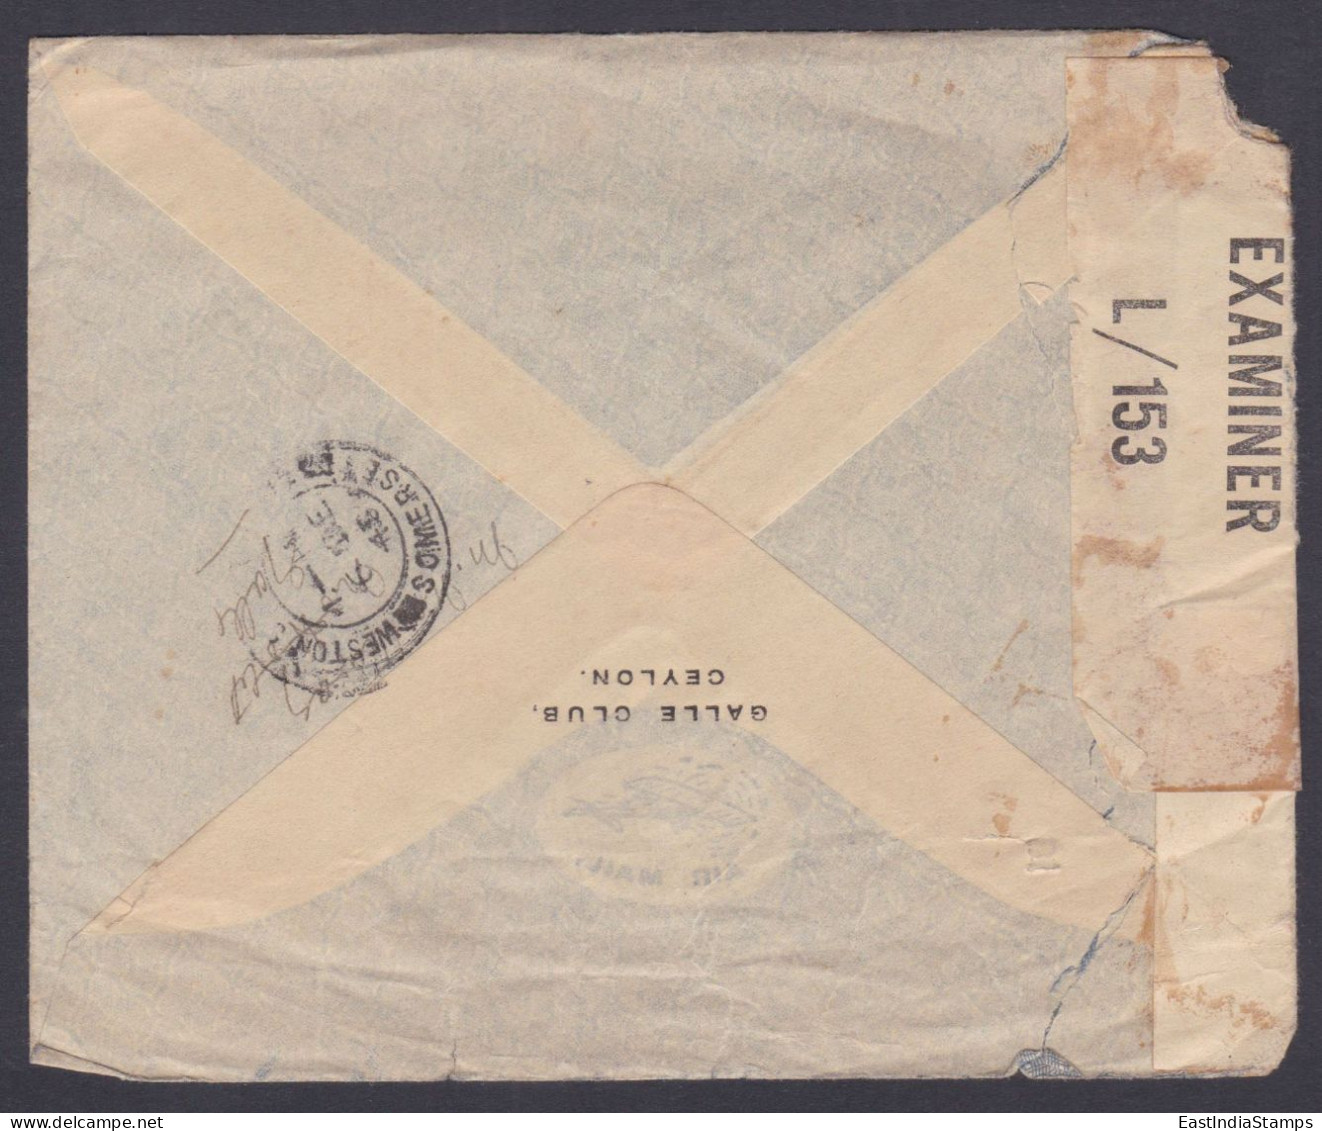 Sri Lanka Ceylon 1943? Used Airmail Cover To England, King George VI, Opened By Censor Examiner - Sri Lanka (Ceylon) (1948-...)